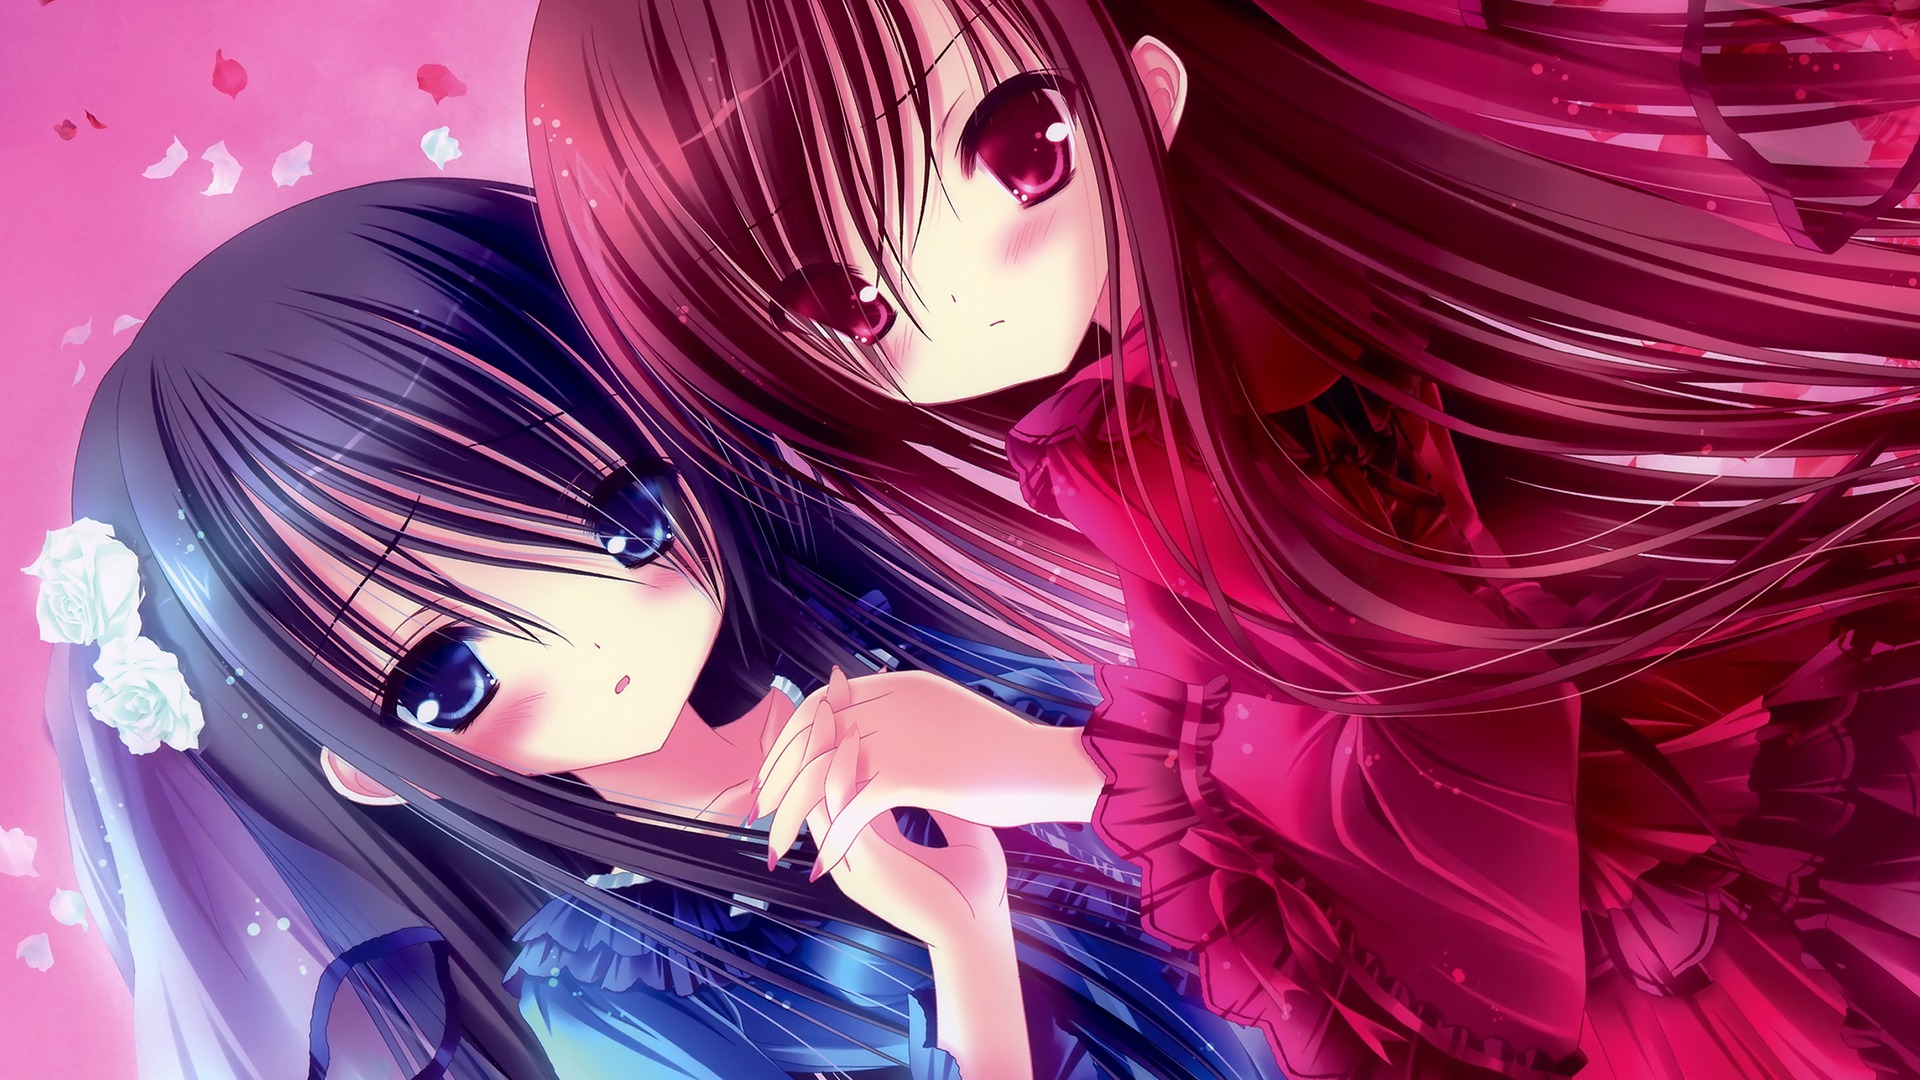 Cute Anime Girls HD Wallpaper - WallpaperSafari